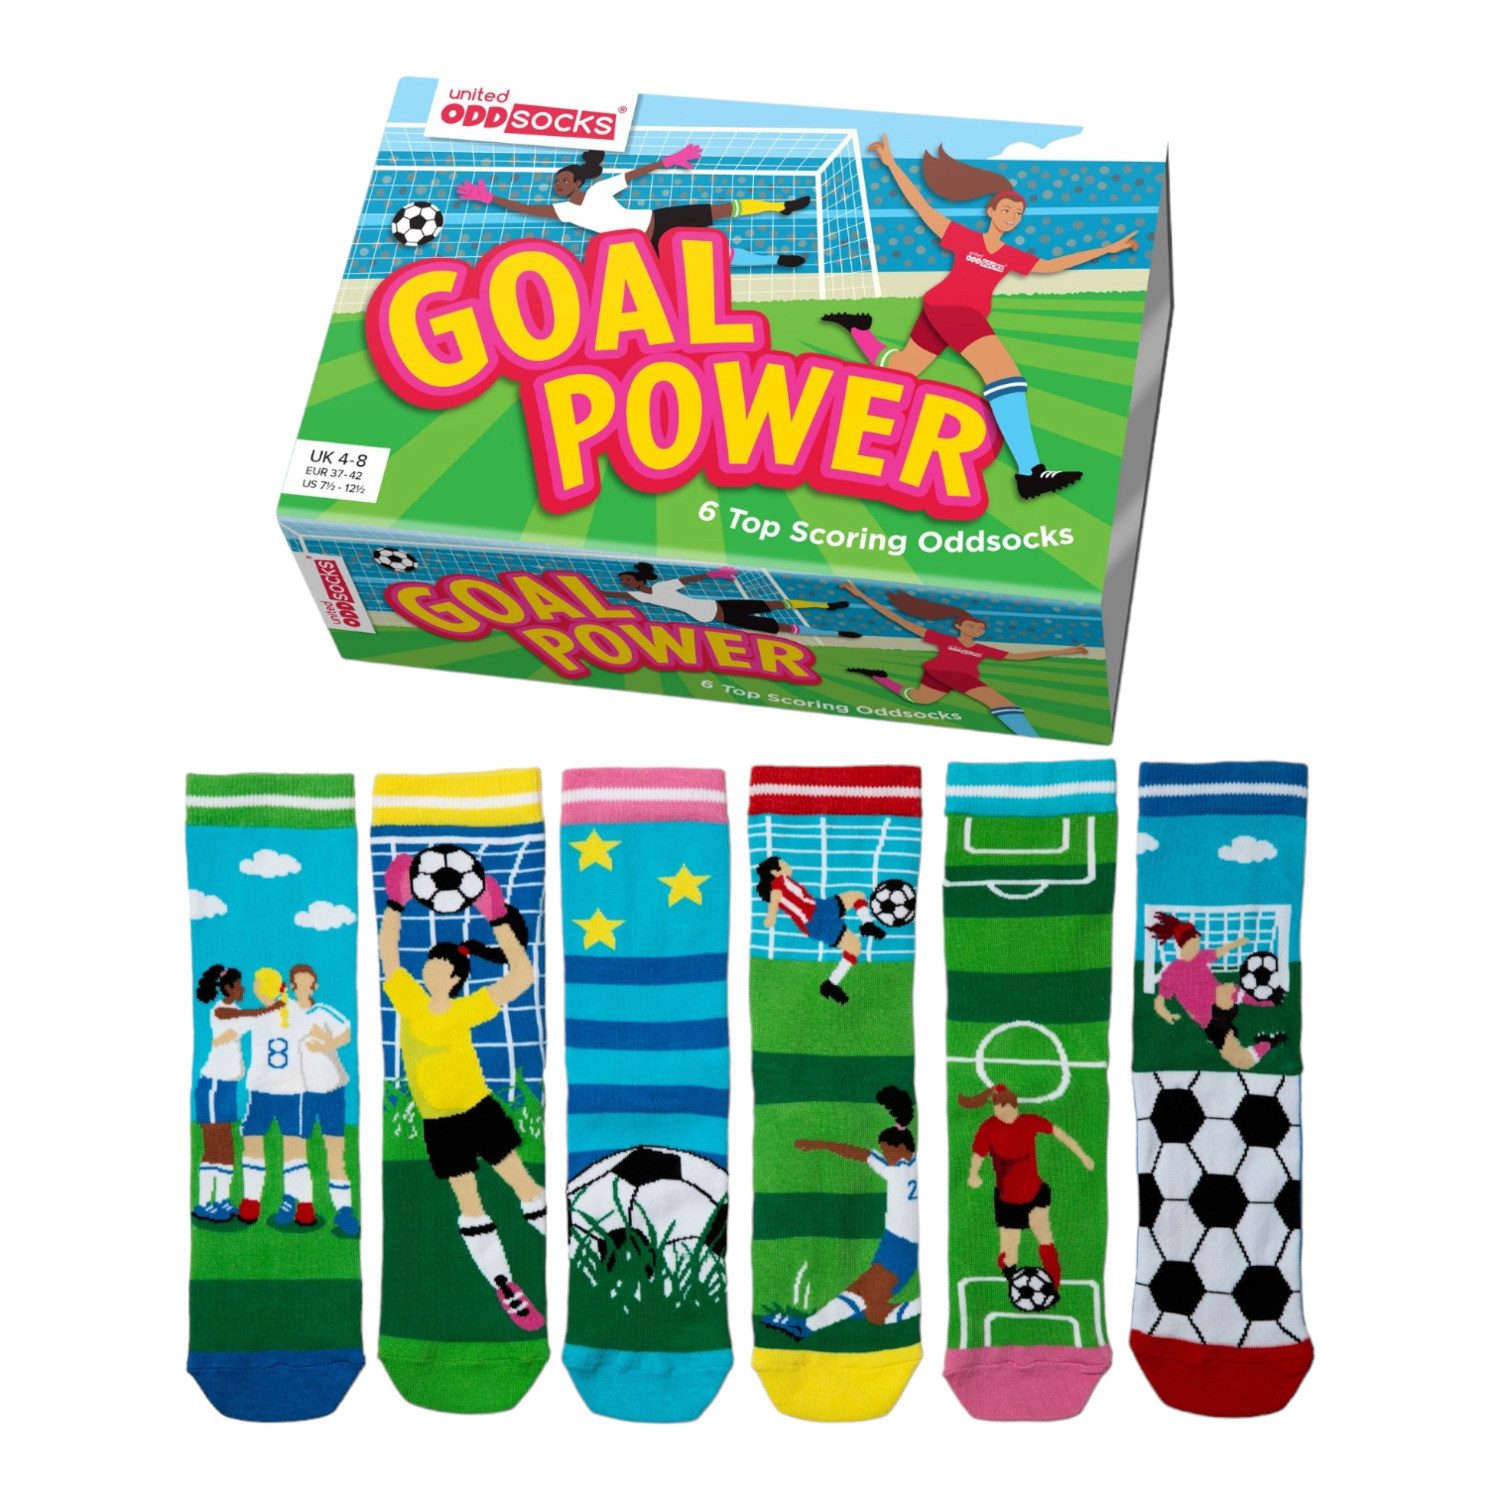 United Oddsocks Freizeitsocken Goal Power Oddsocks Socken Frauenfußball Strumpf in 37-42 im 6er Set